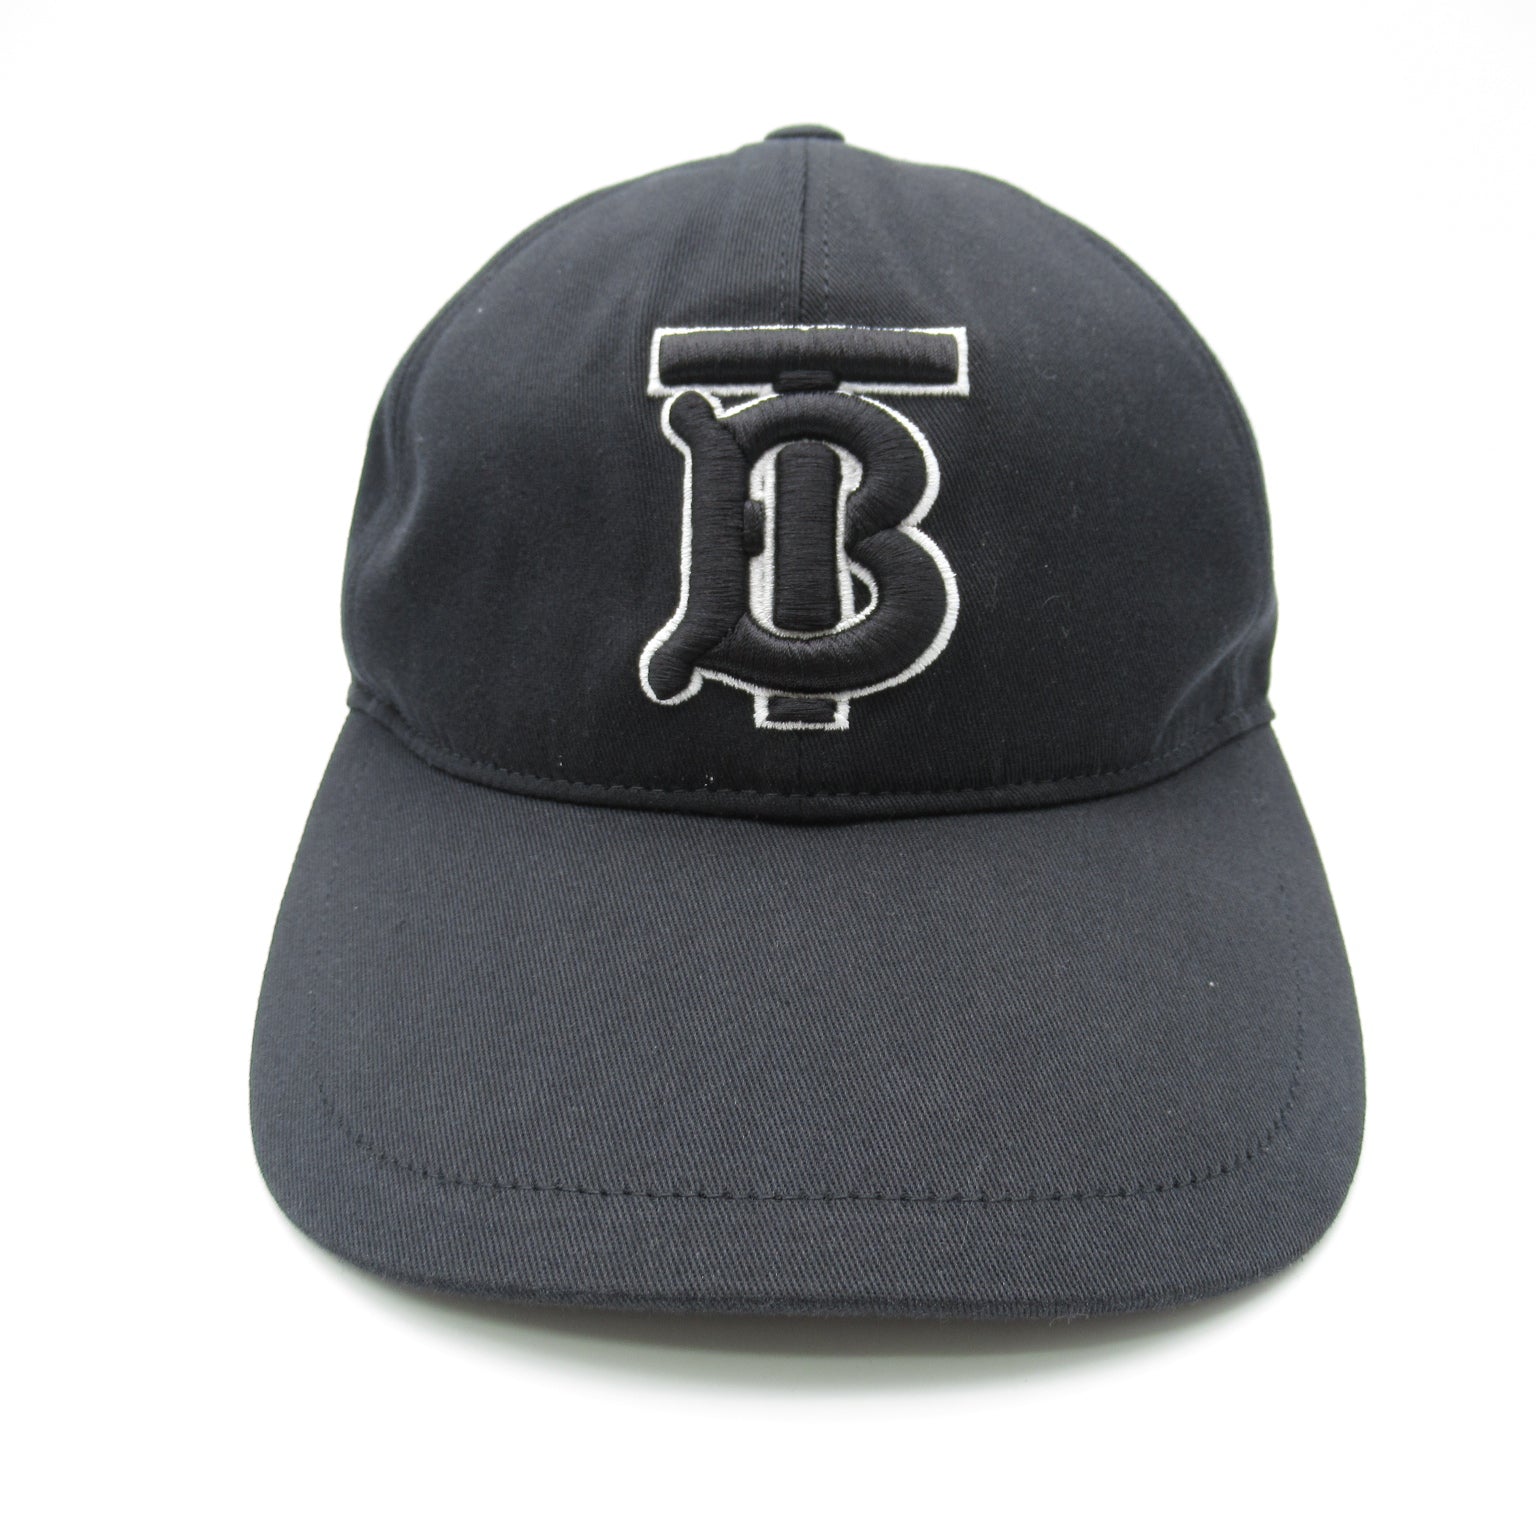 Burberry  Caped Caped Cotton Hats   Black 8017245